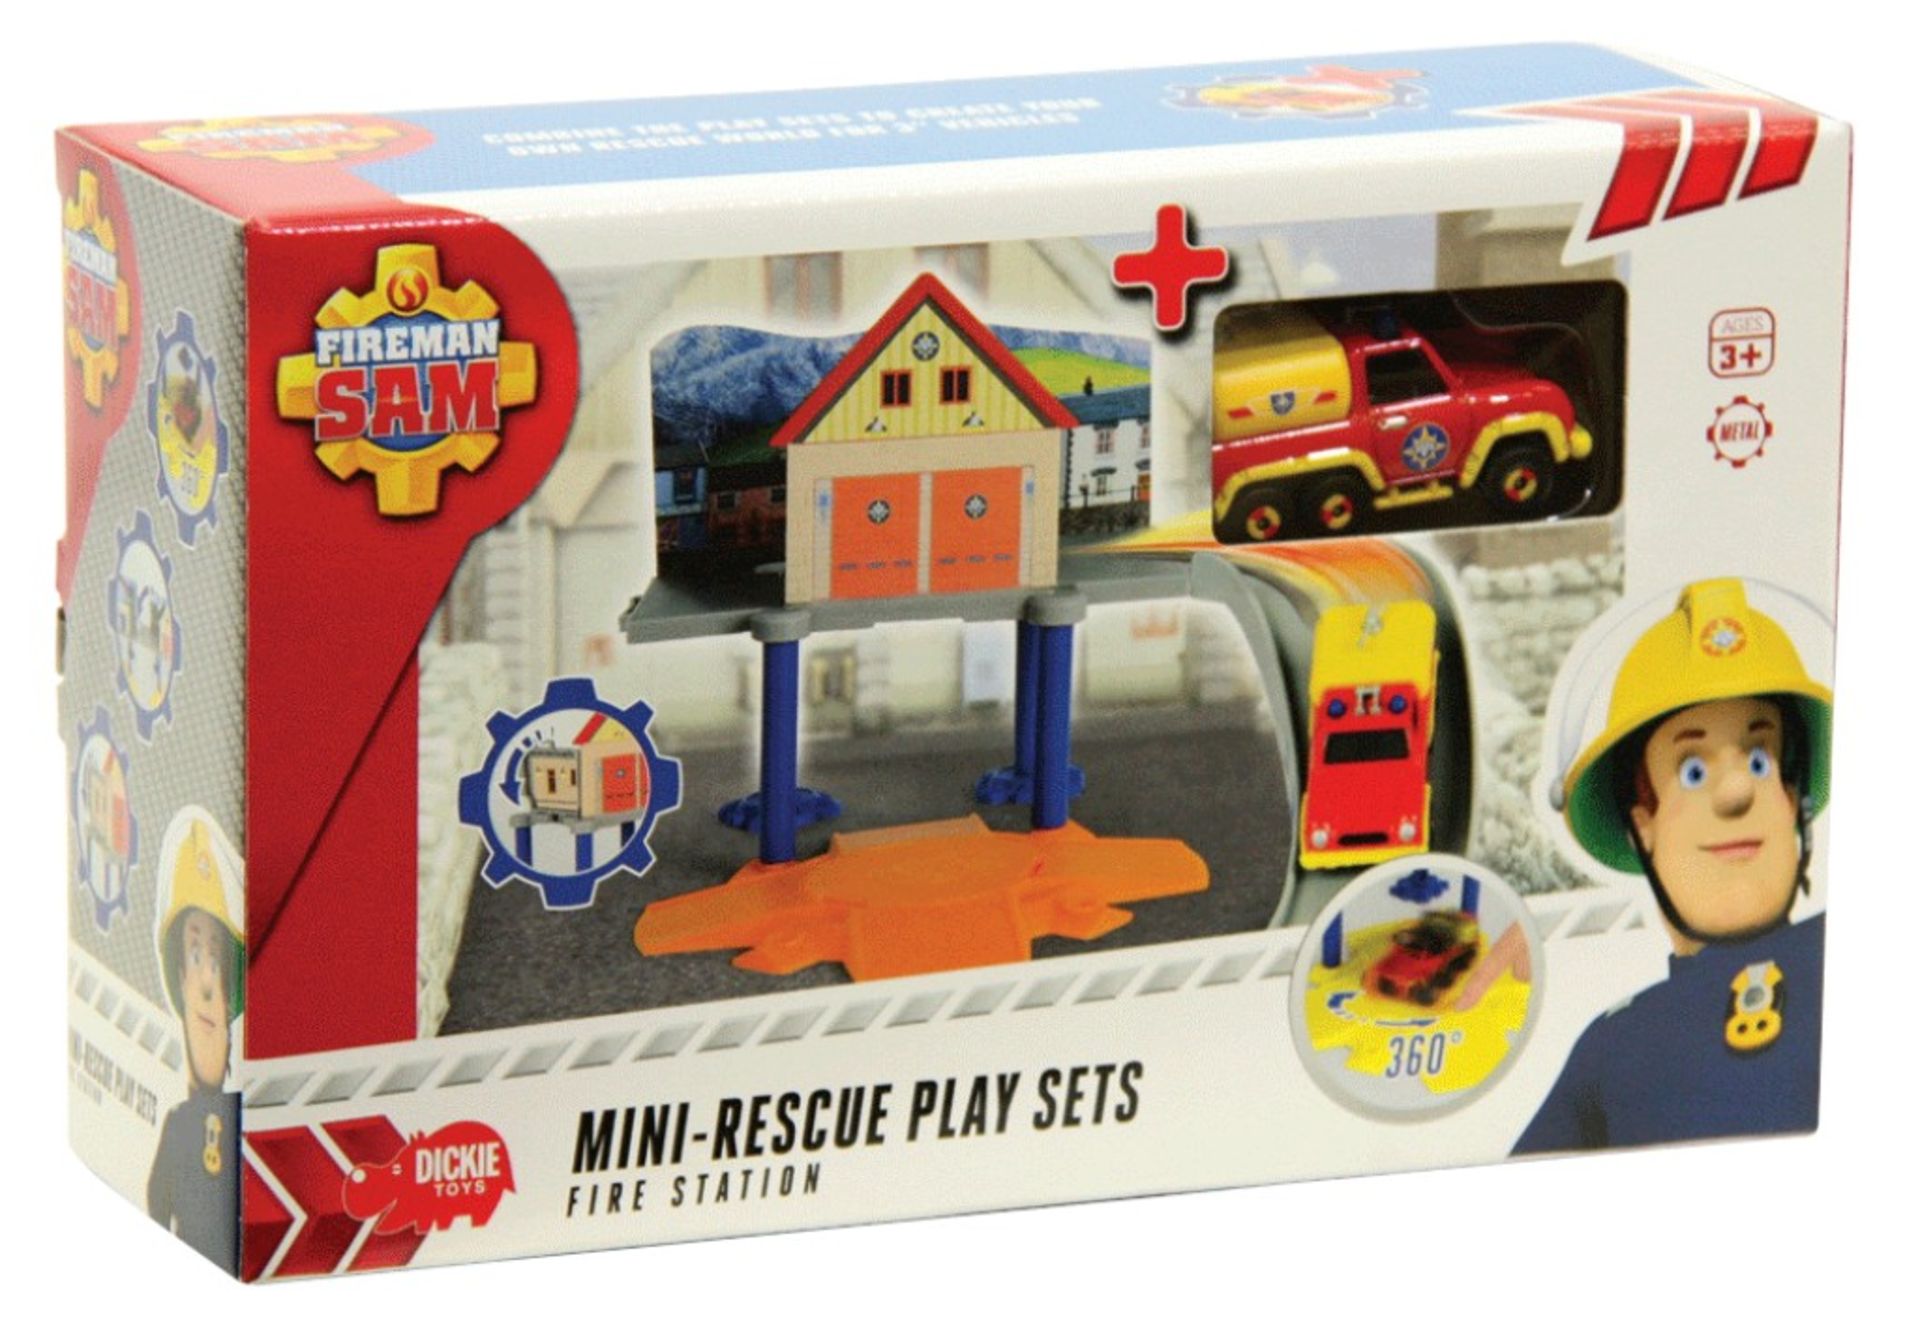 V Brand New Fireman Sam Mini-Rescue Fire Station Boat House Playset ISP - £14.99 Amazon